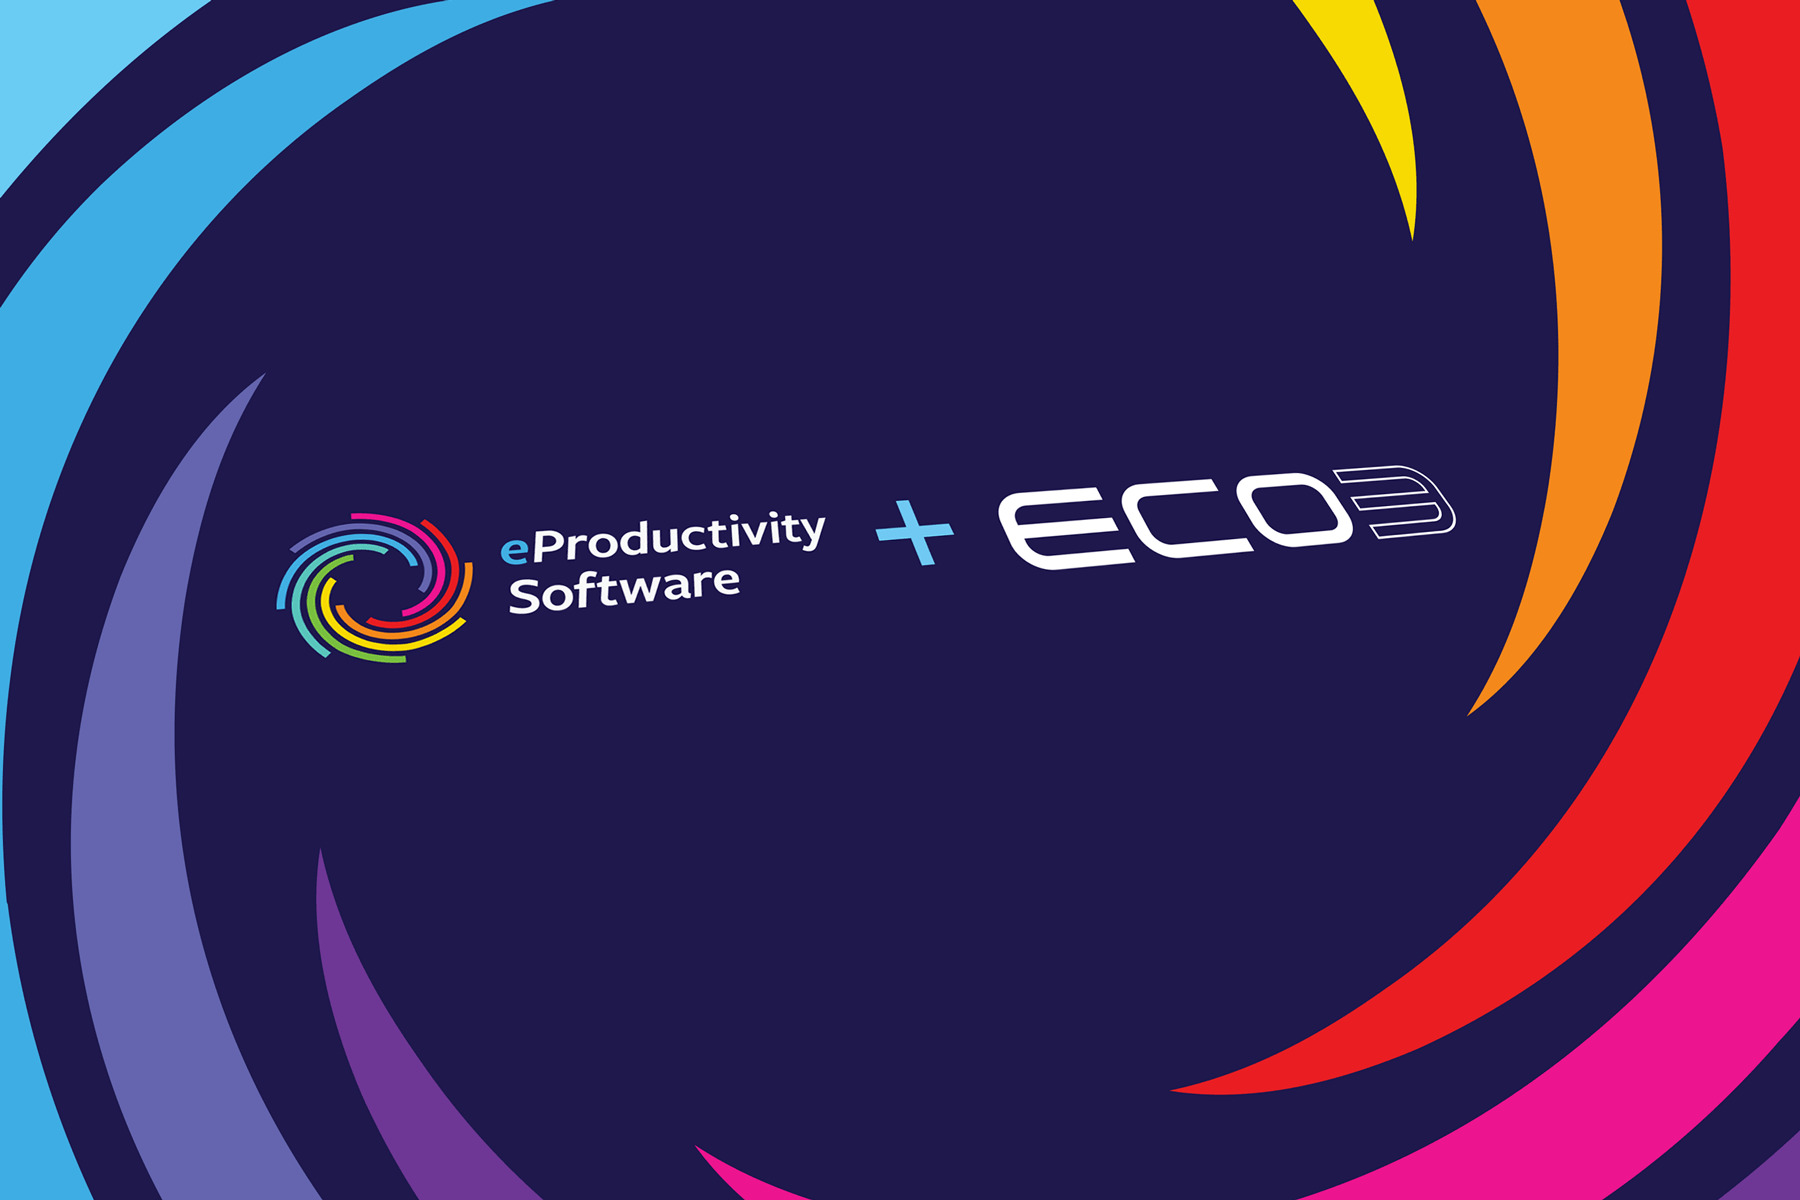 ePS and ECO3 partnership